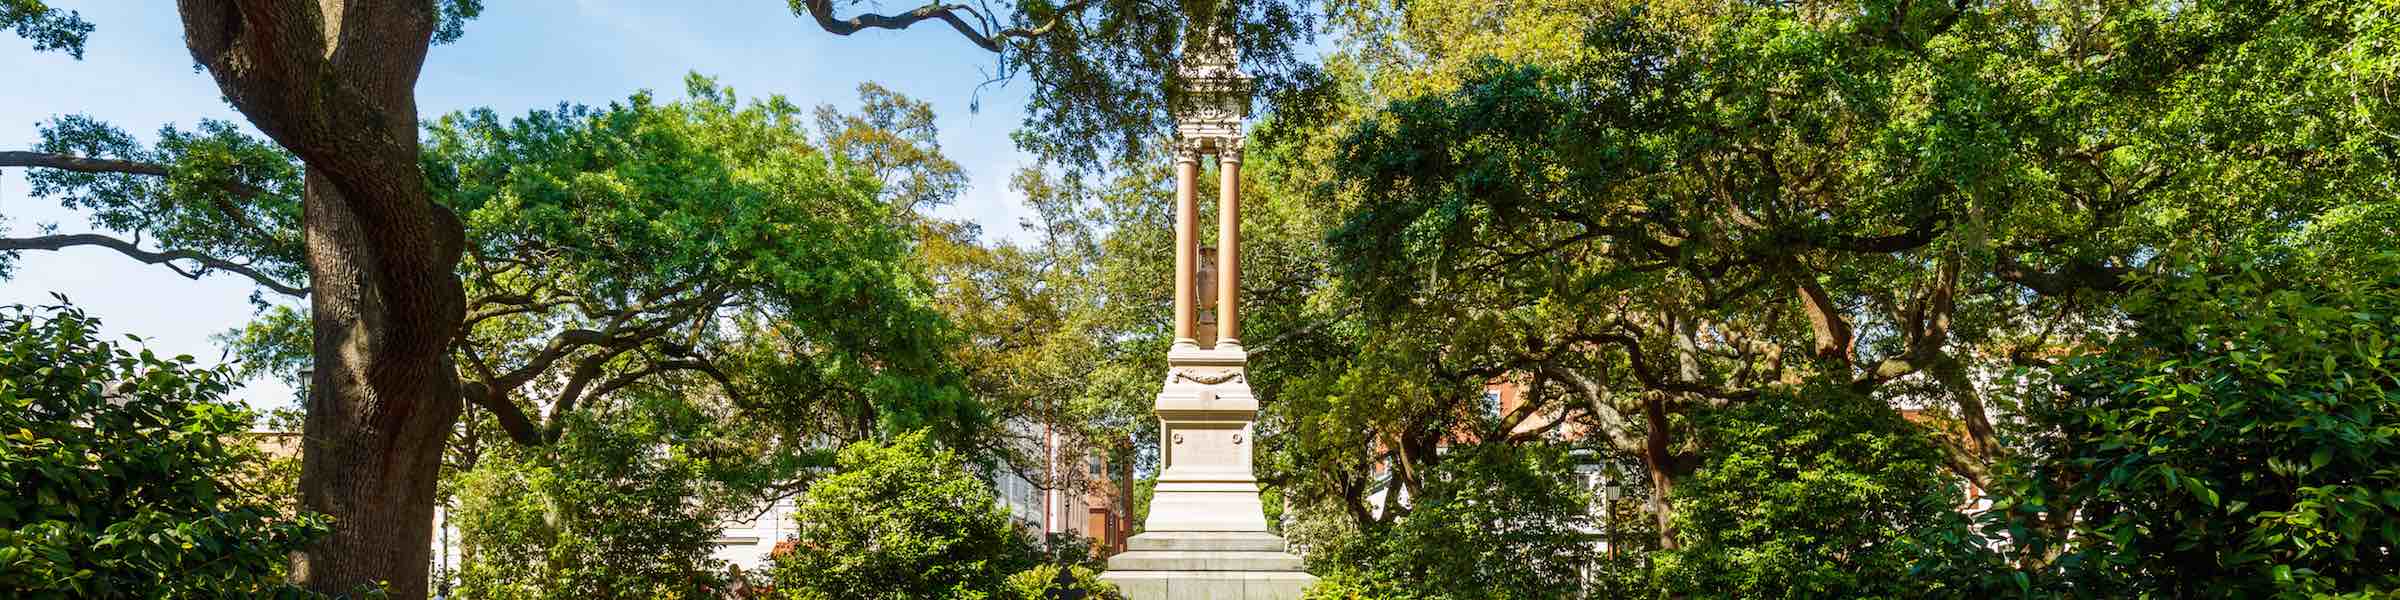 The Gordon Monument in Savannah's Wright Square.